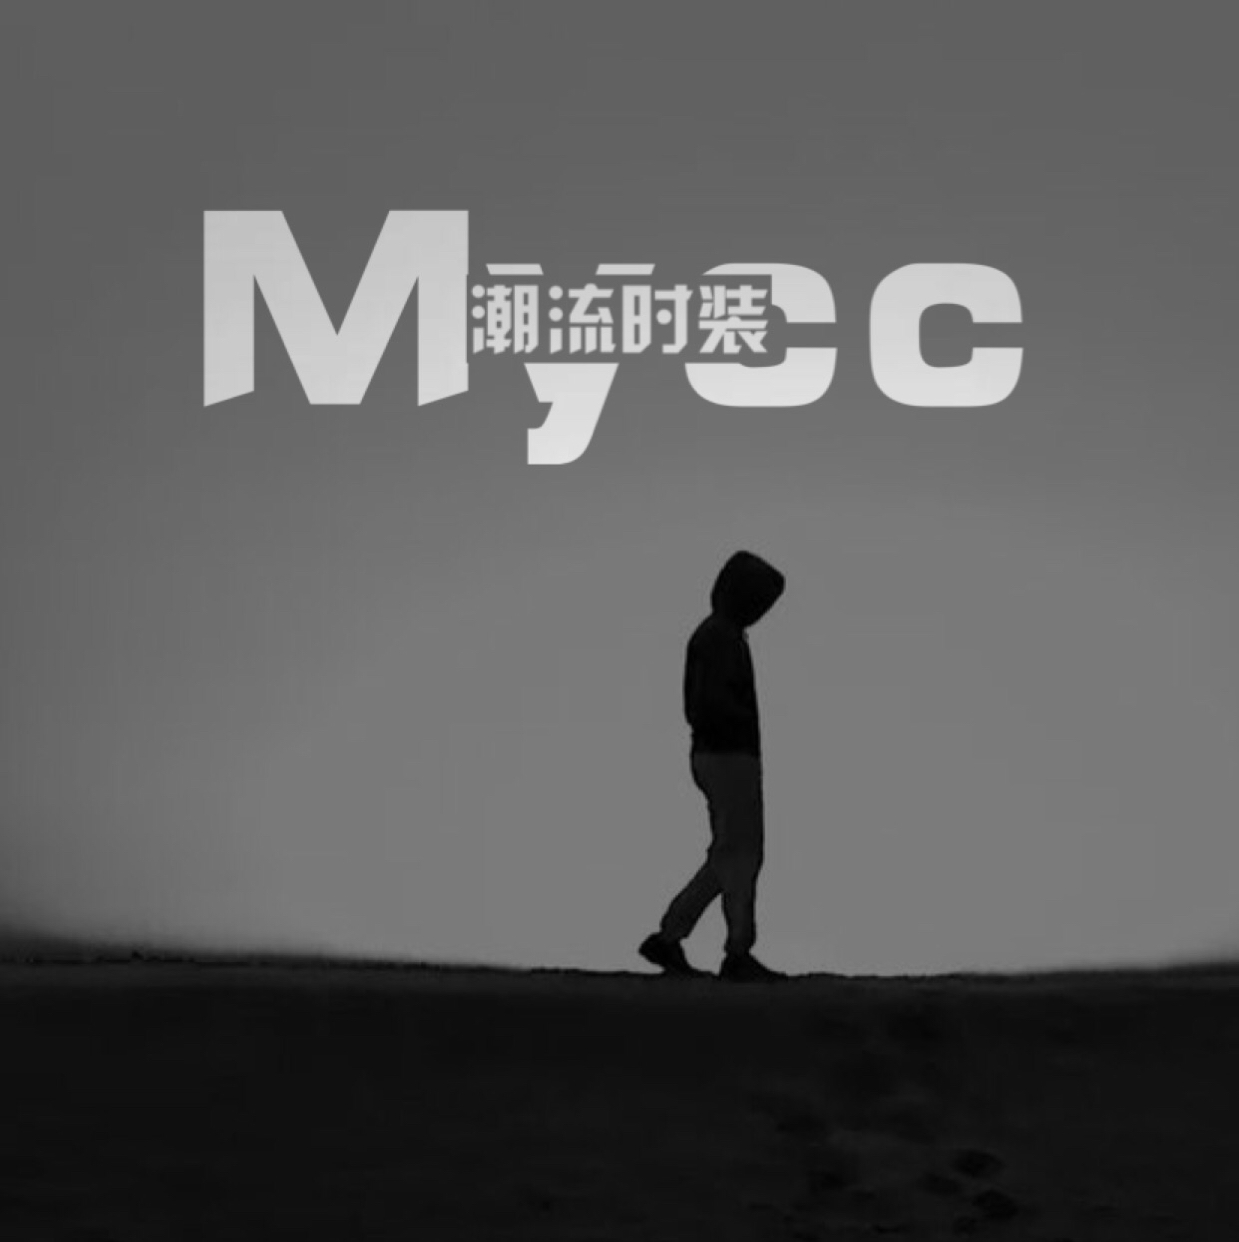 「Mycc」潮流时装